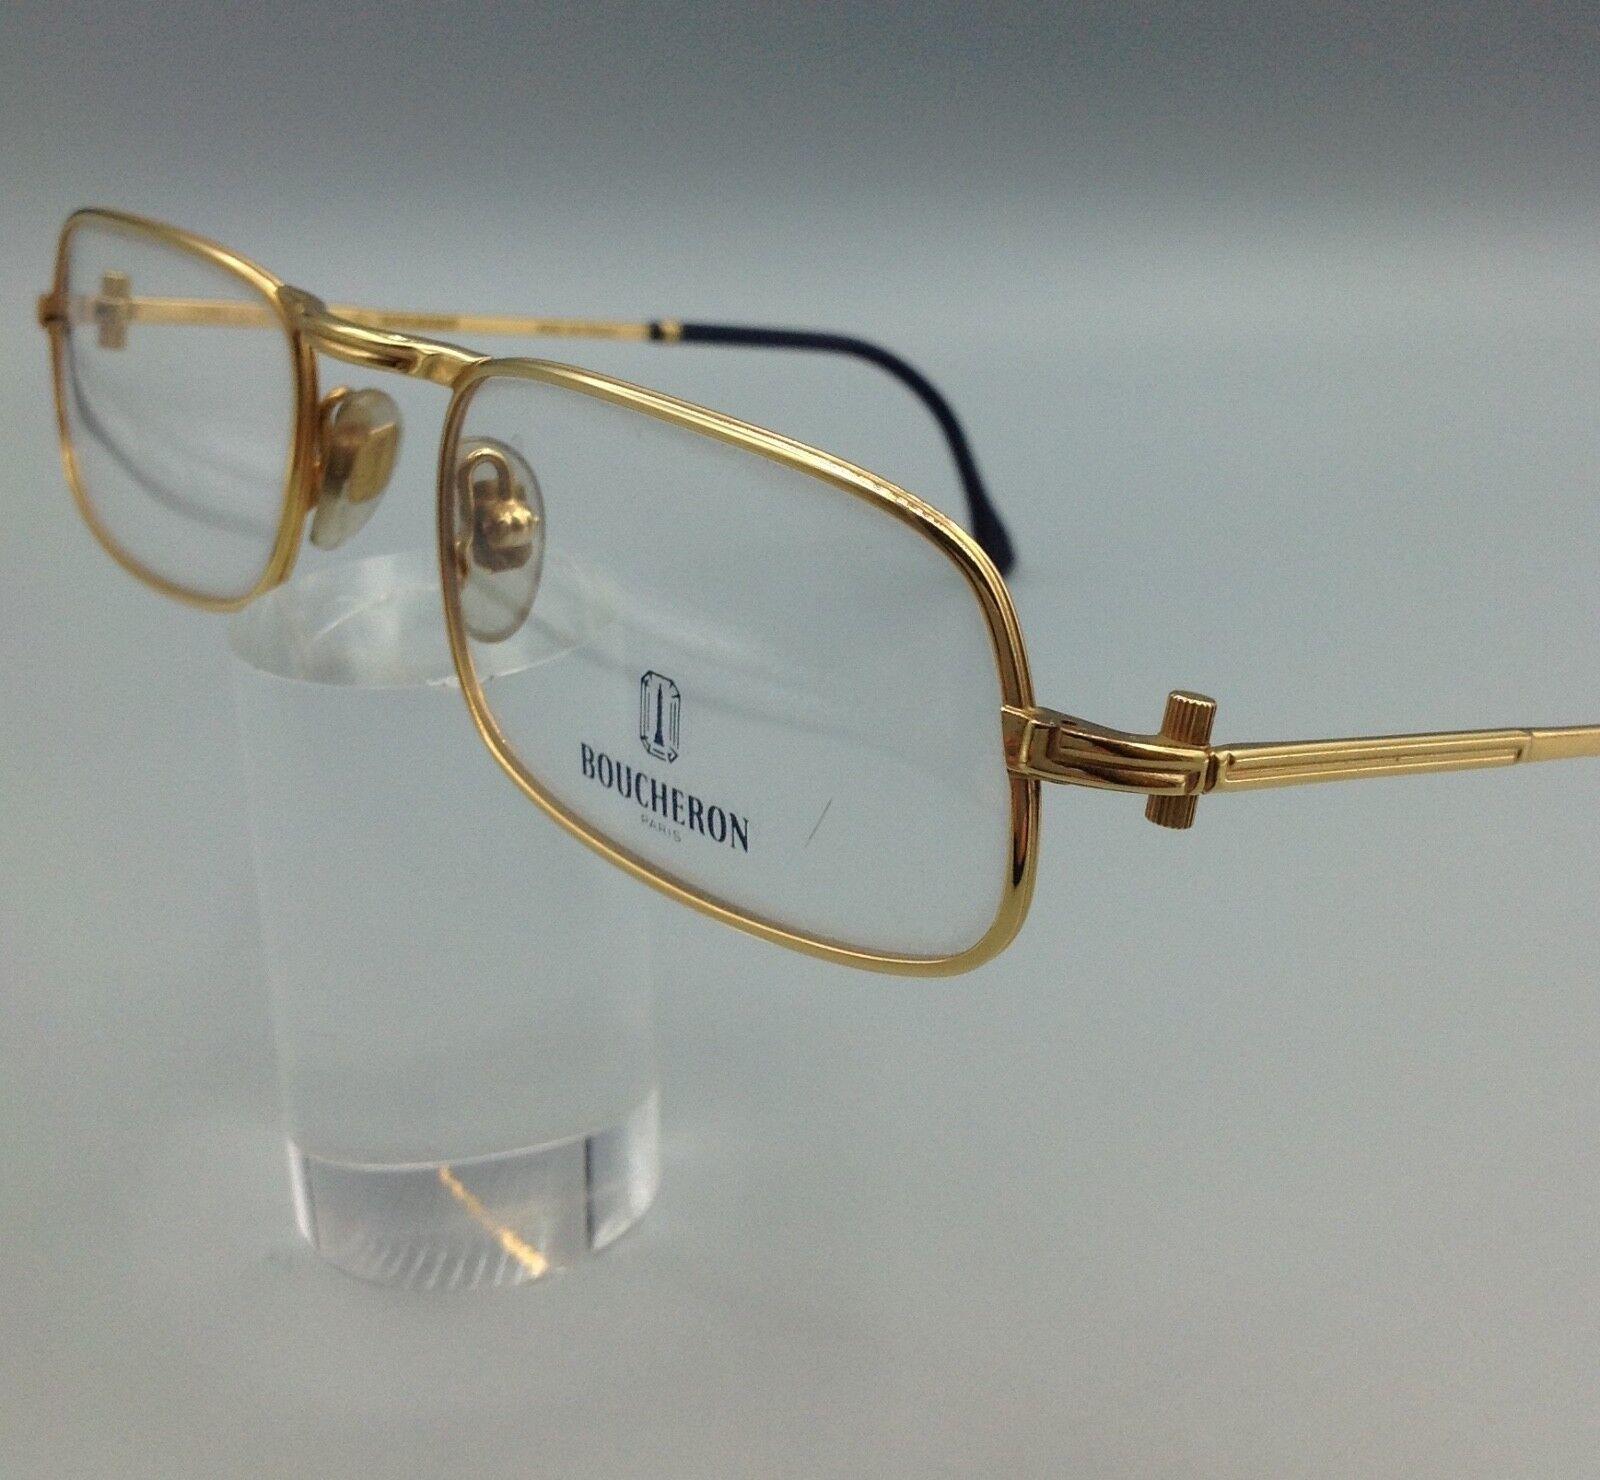 Boucheron Paris Lunettes vintage occhiale gold filled eyewear made in France